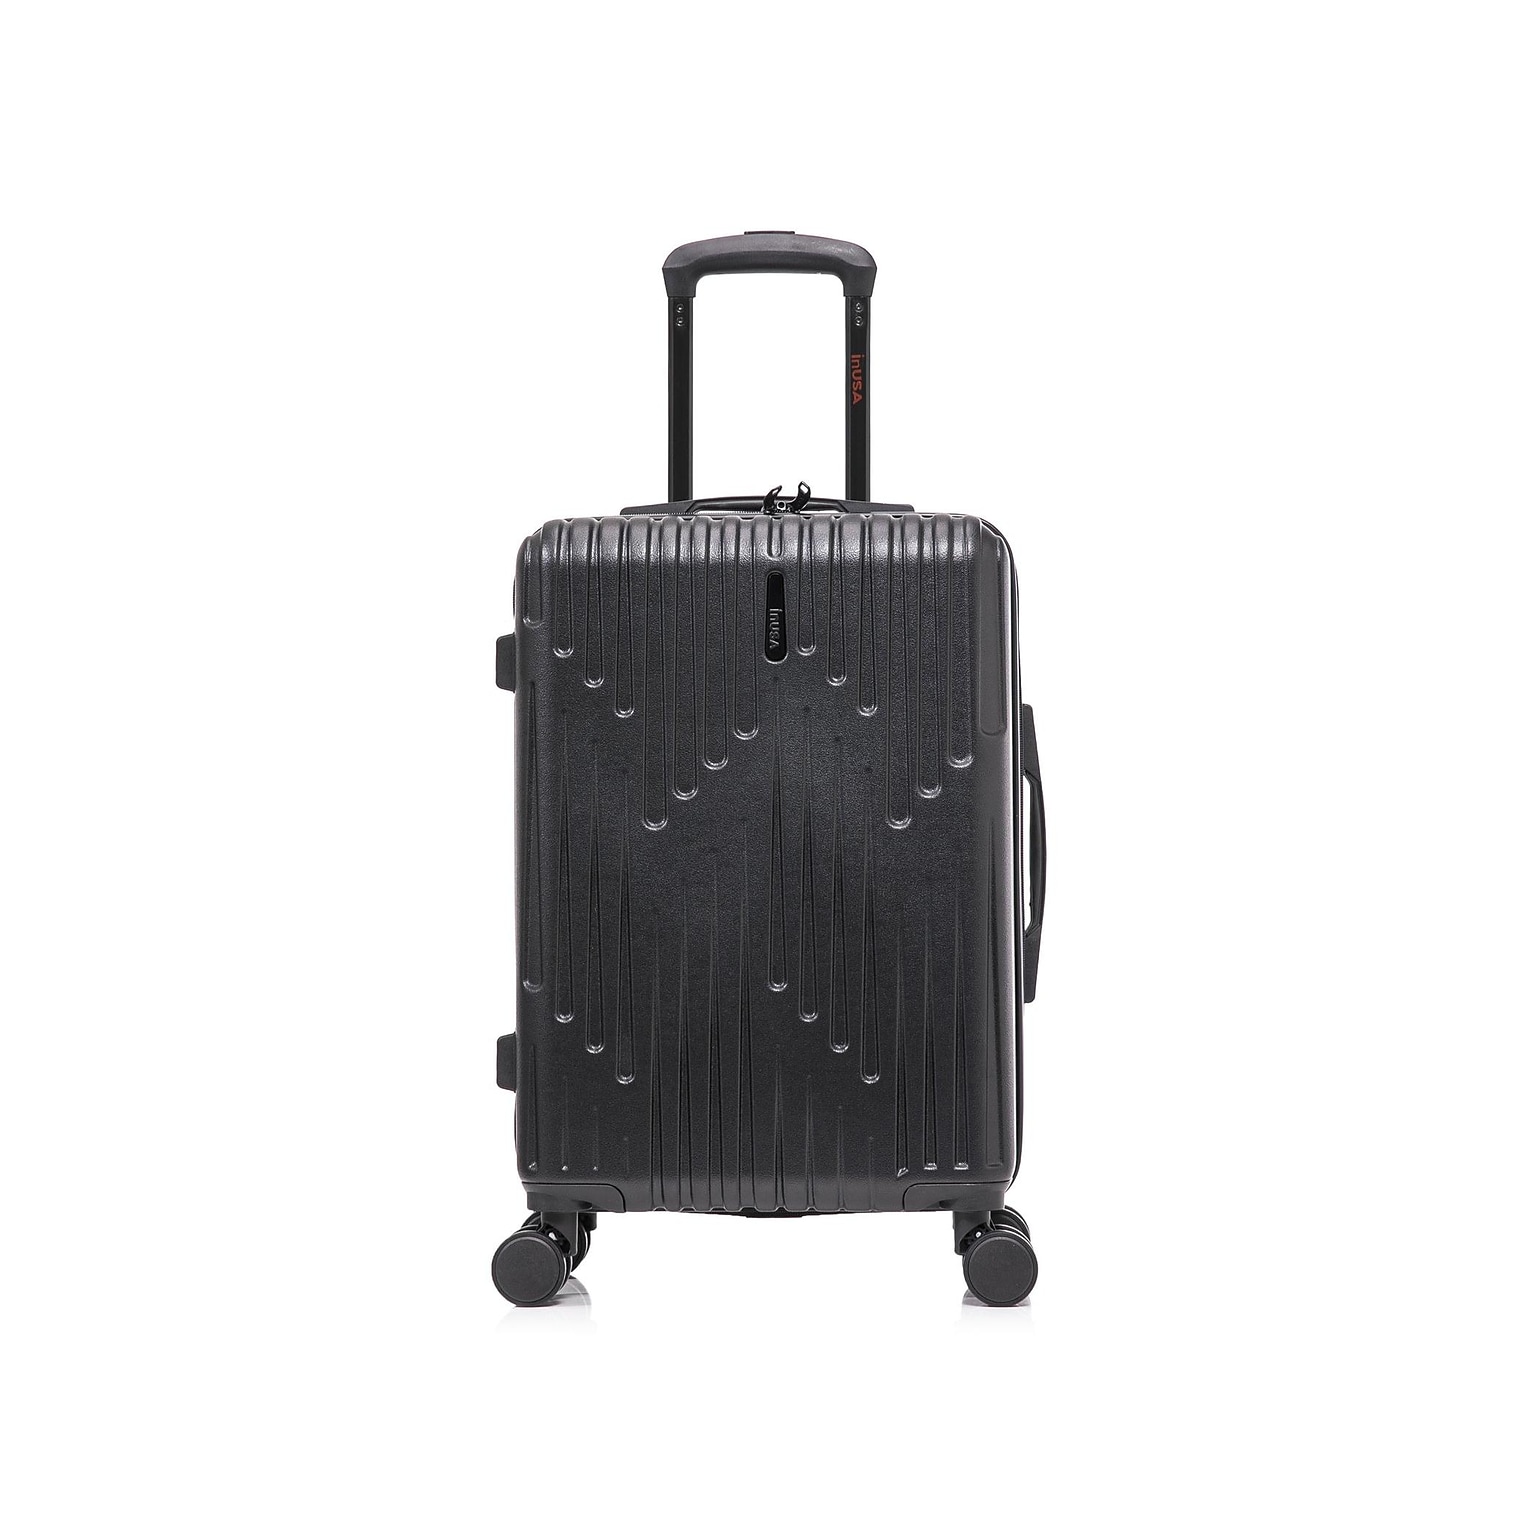 InUSA Drip Polycarbonate/ABS Carry-On Suitcase, Black (IUDRI00S-BLK)